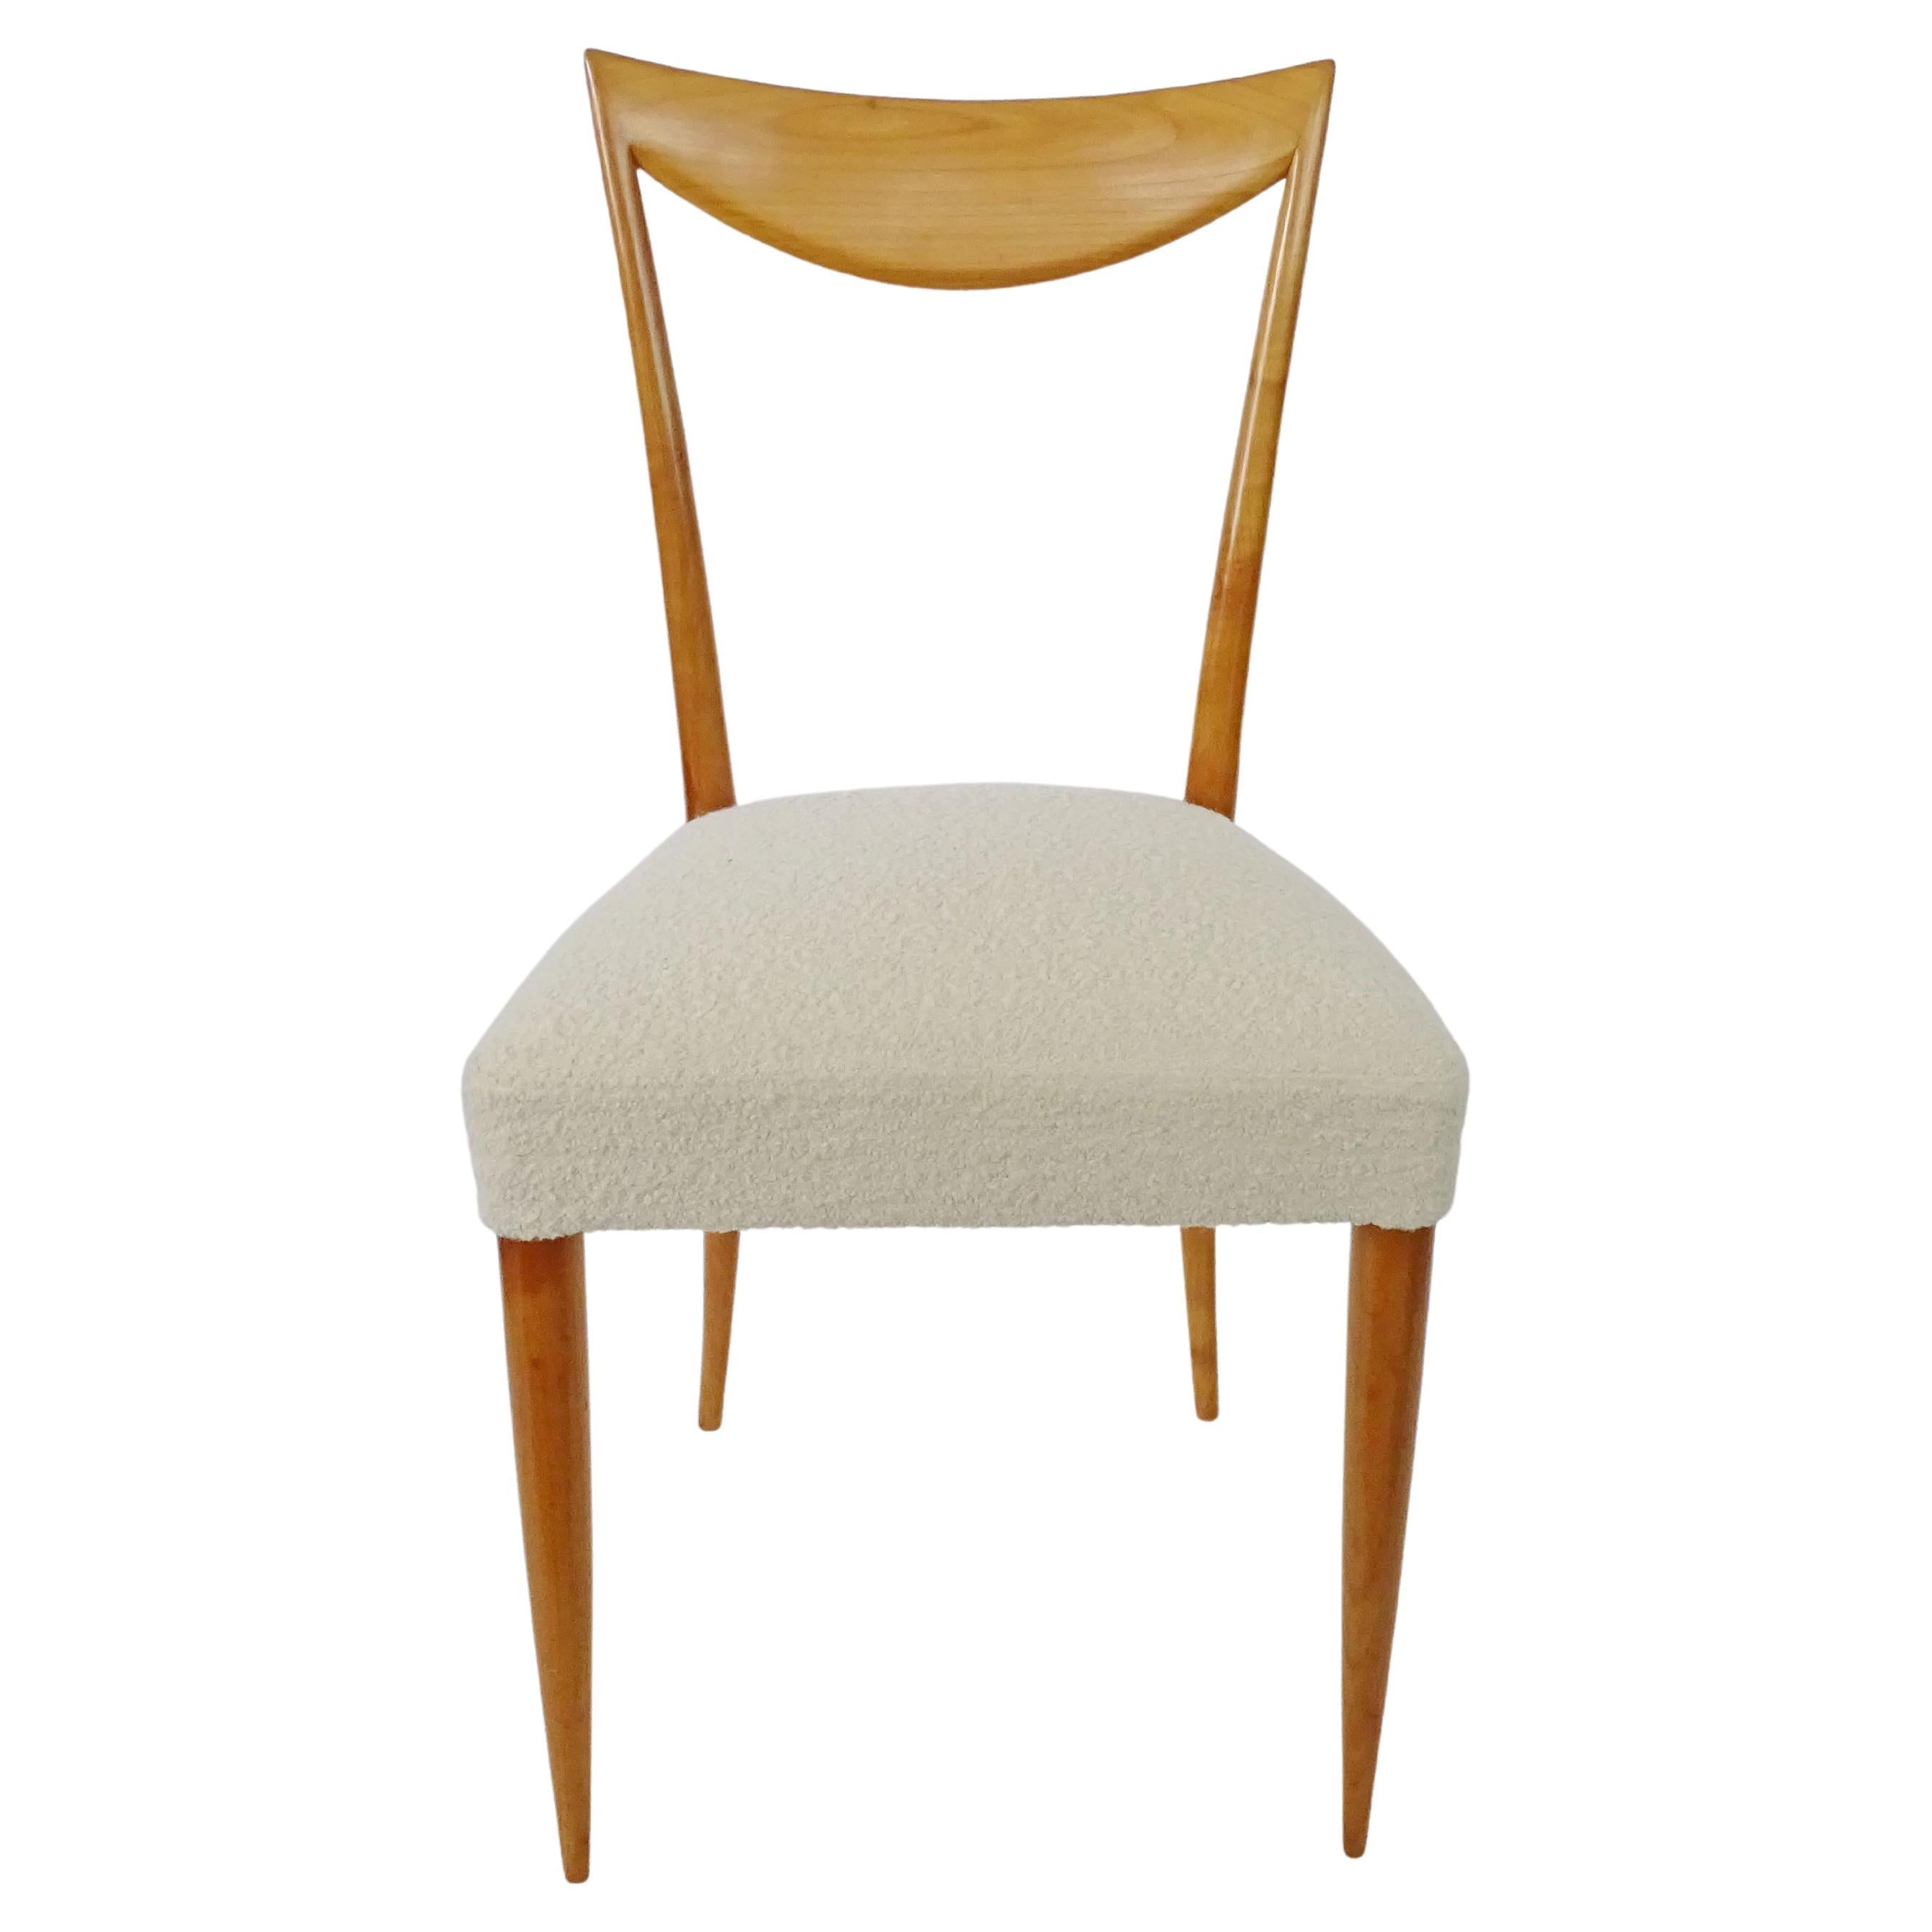 Italian 1950s Sculptural Single Chair For Sale